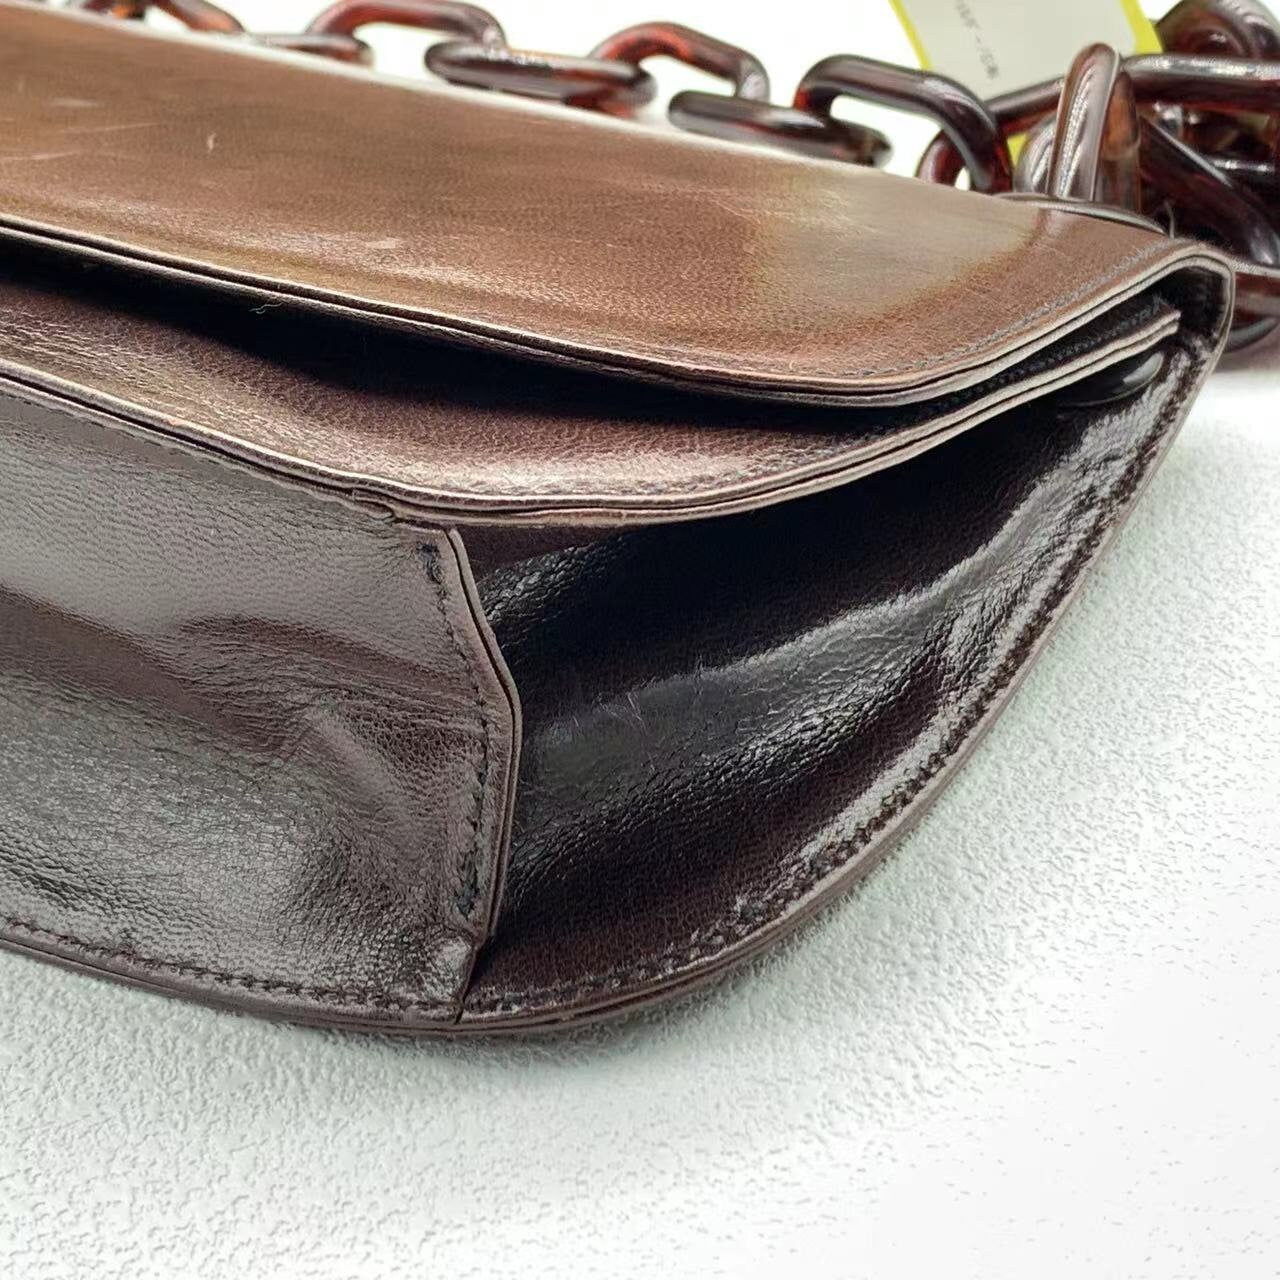 PRADA VINTAGE 100% Authentic Genuine Leather Shoulder Bag, Brown, 2000's, Good Condition